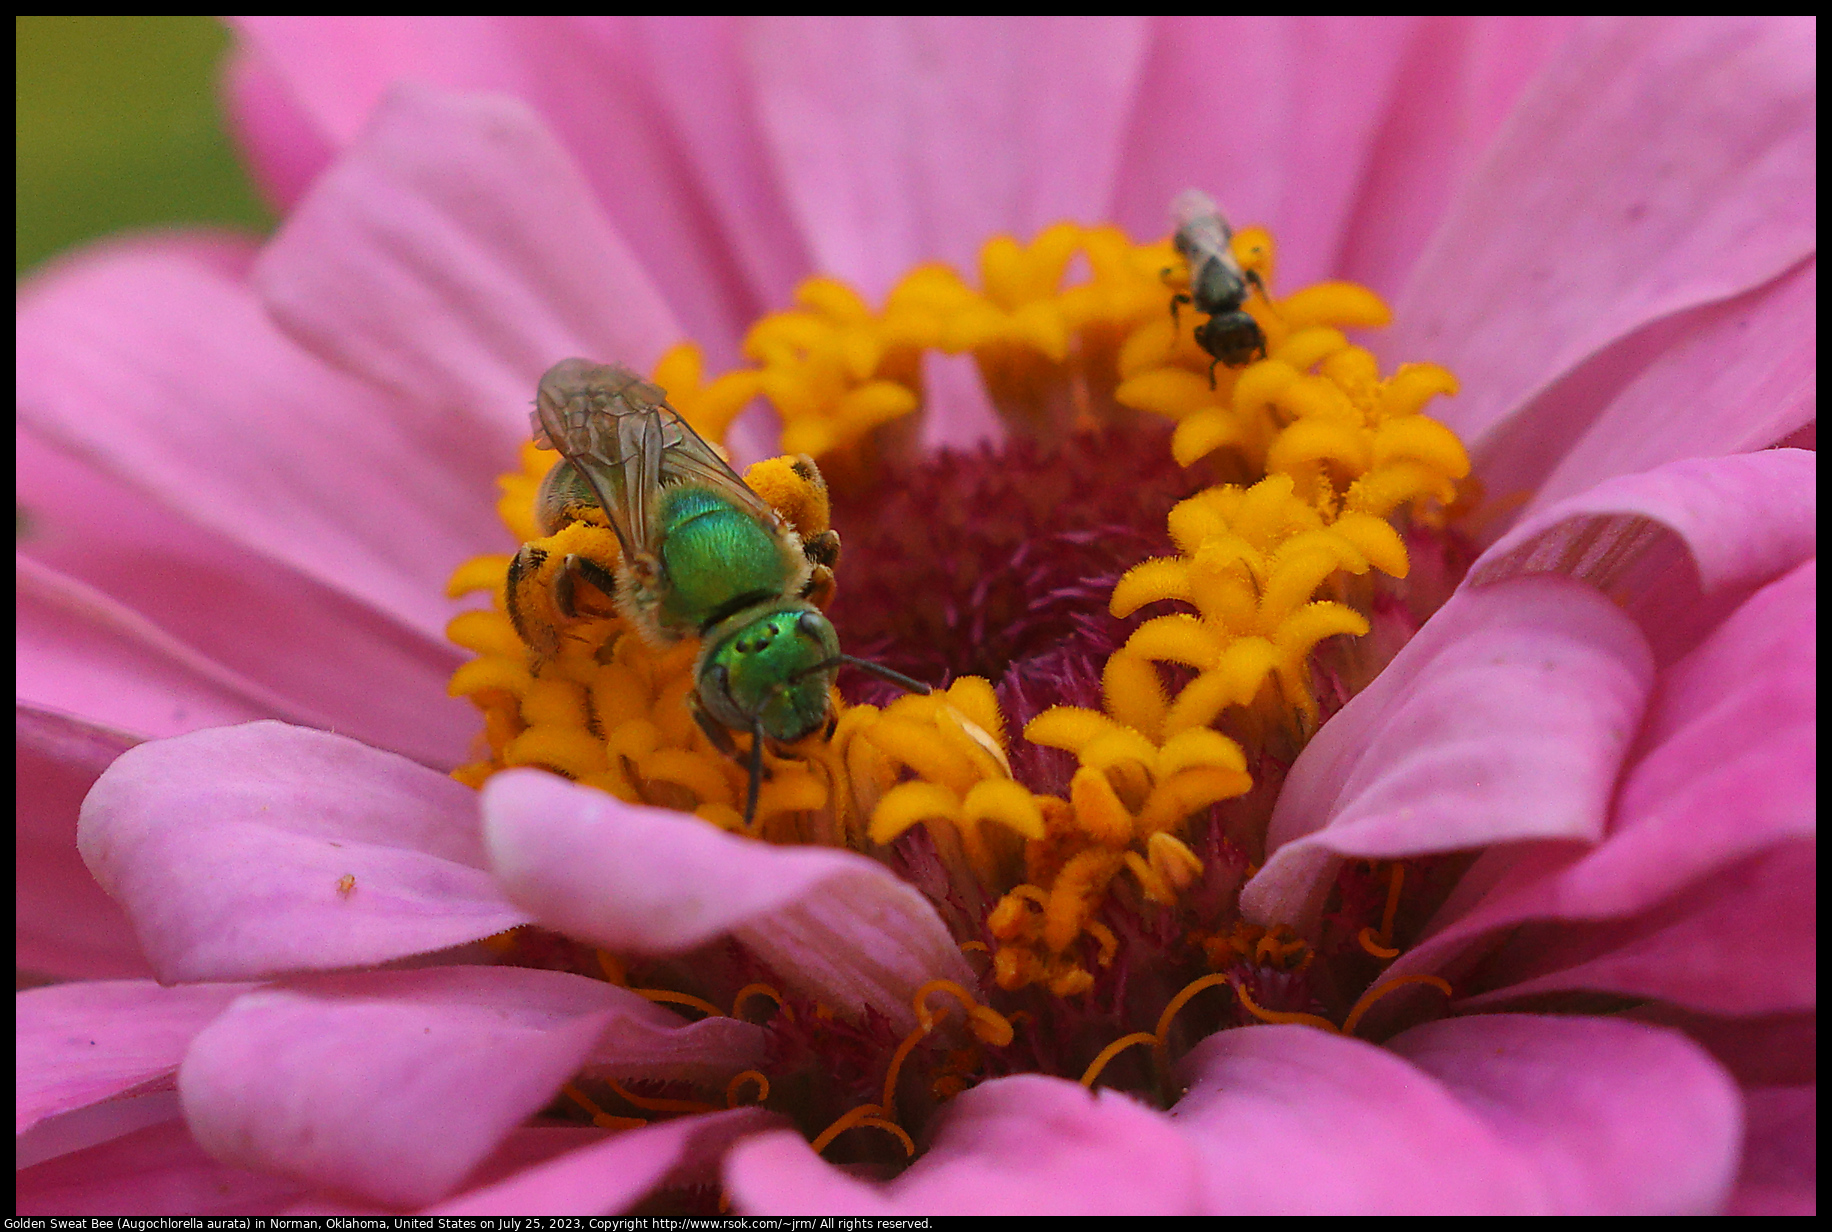 Golden Sweat Bee (Augochlorella aurata) in Norman, Oklahoma, United States on July 25, 2023